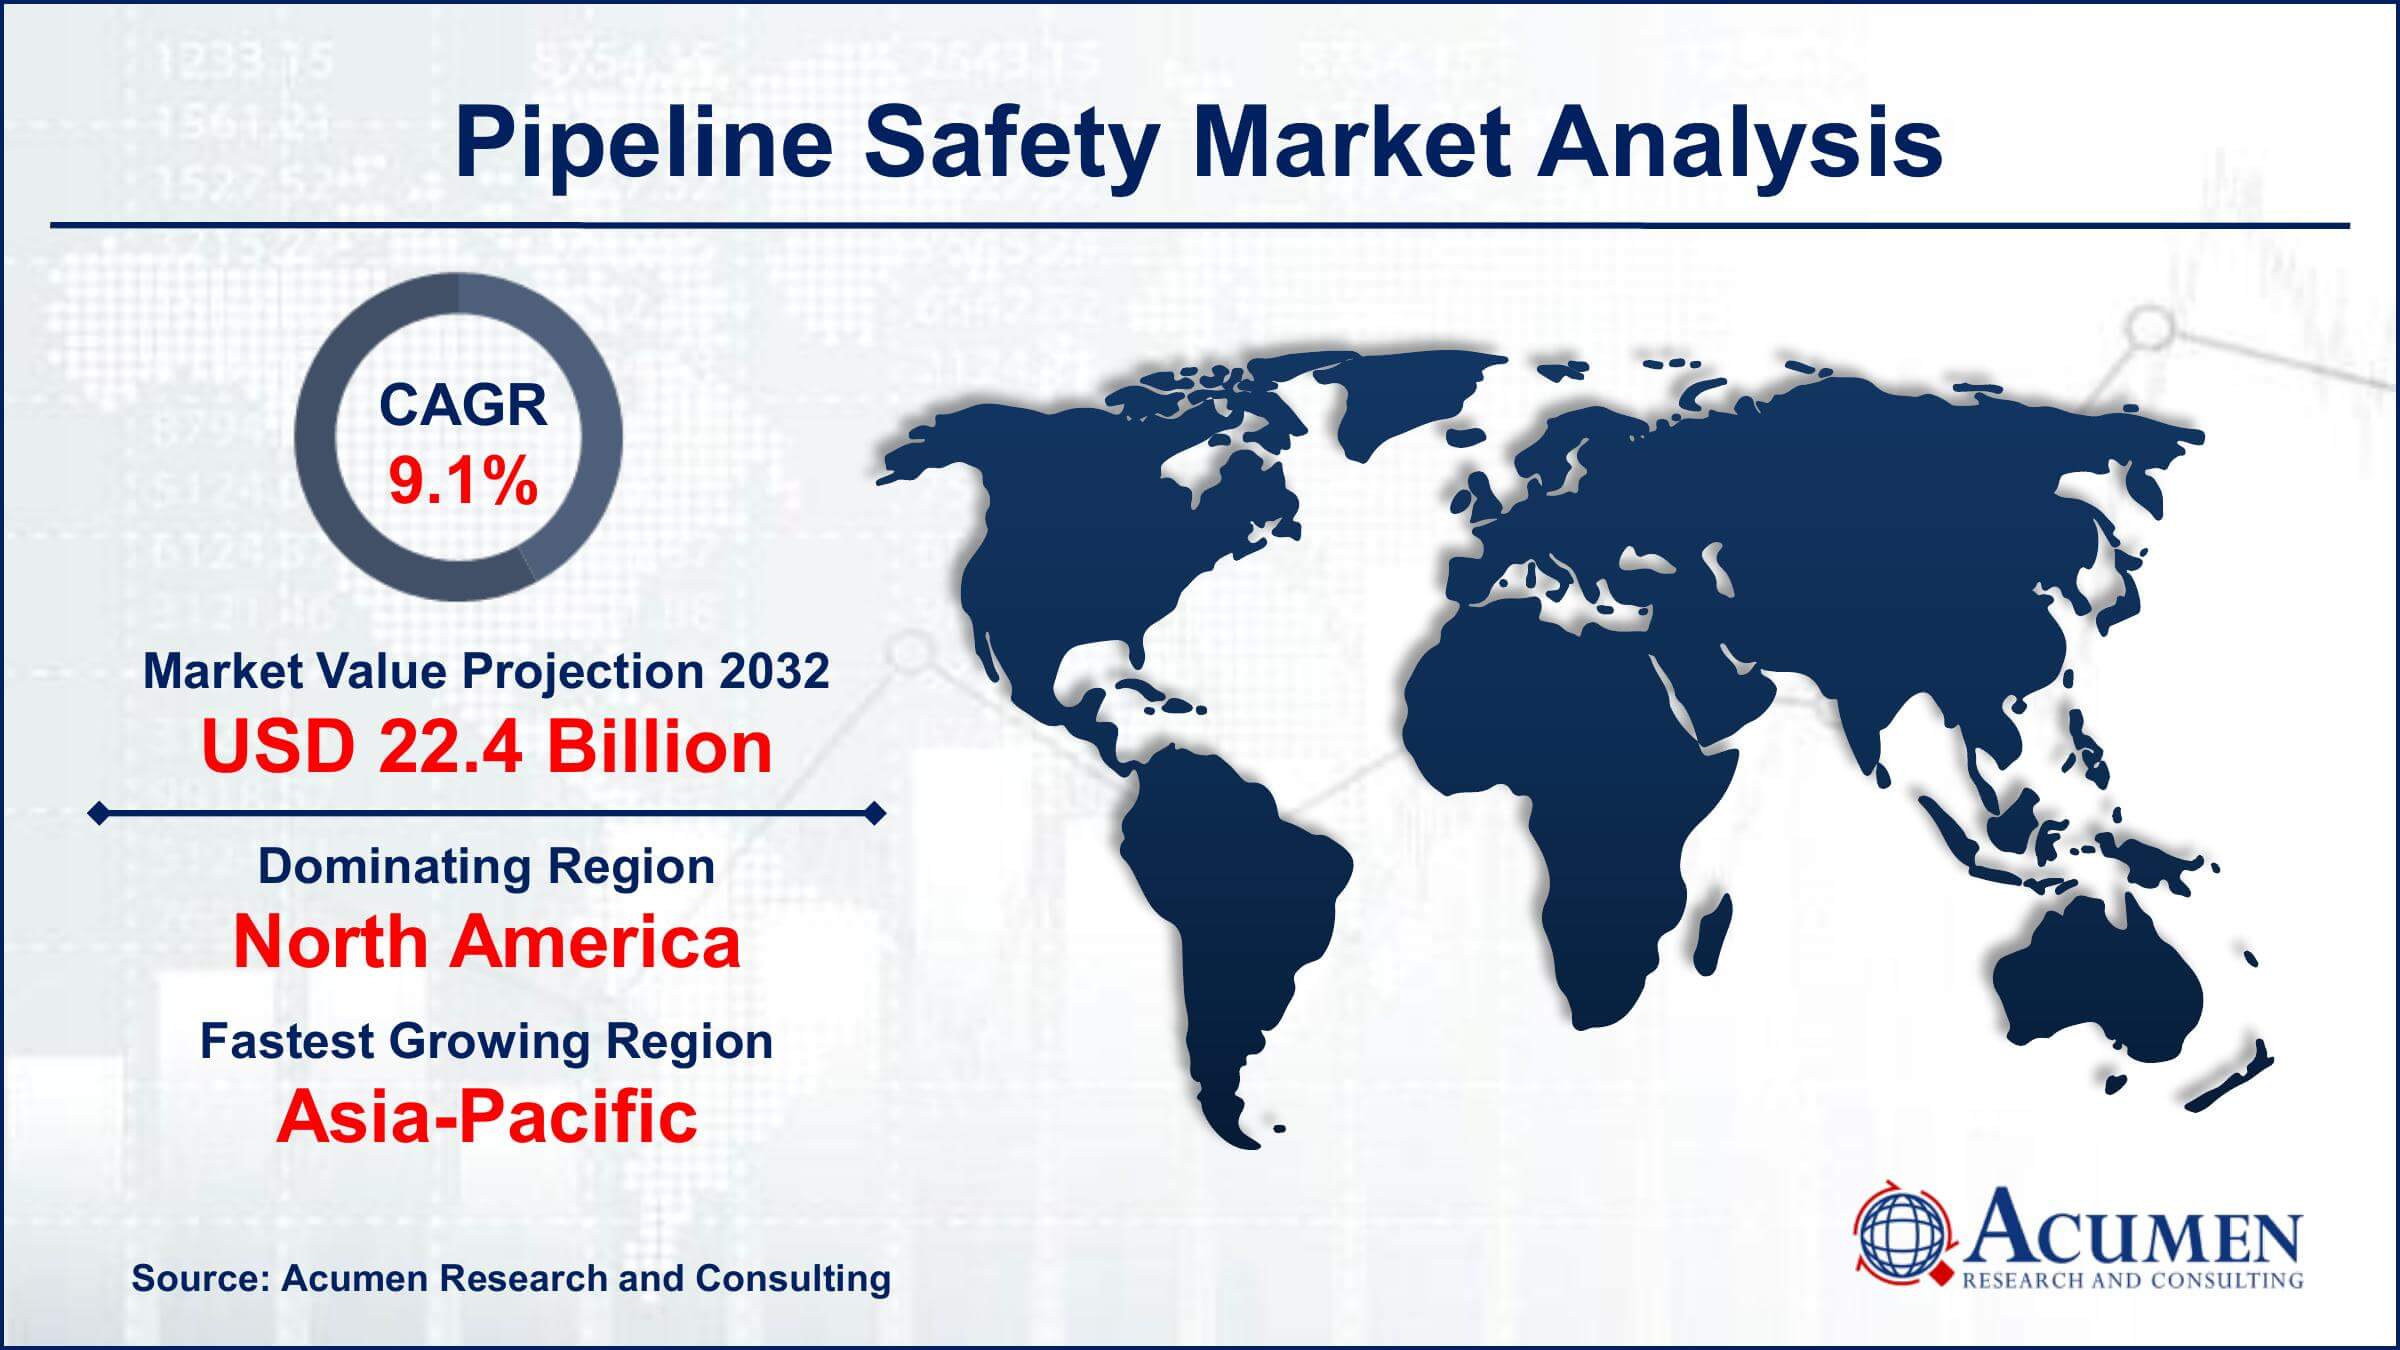 Global Pipeline Safety Market Trends